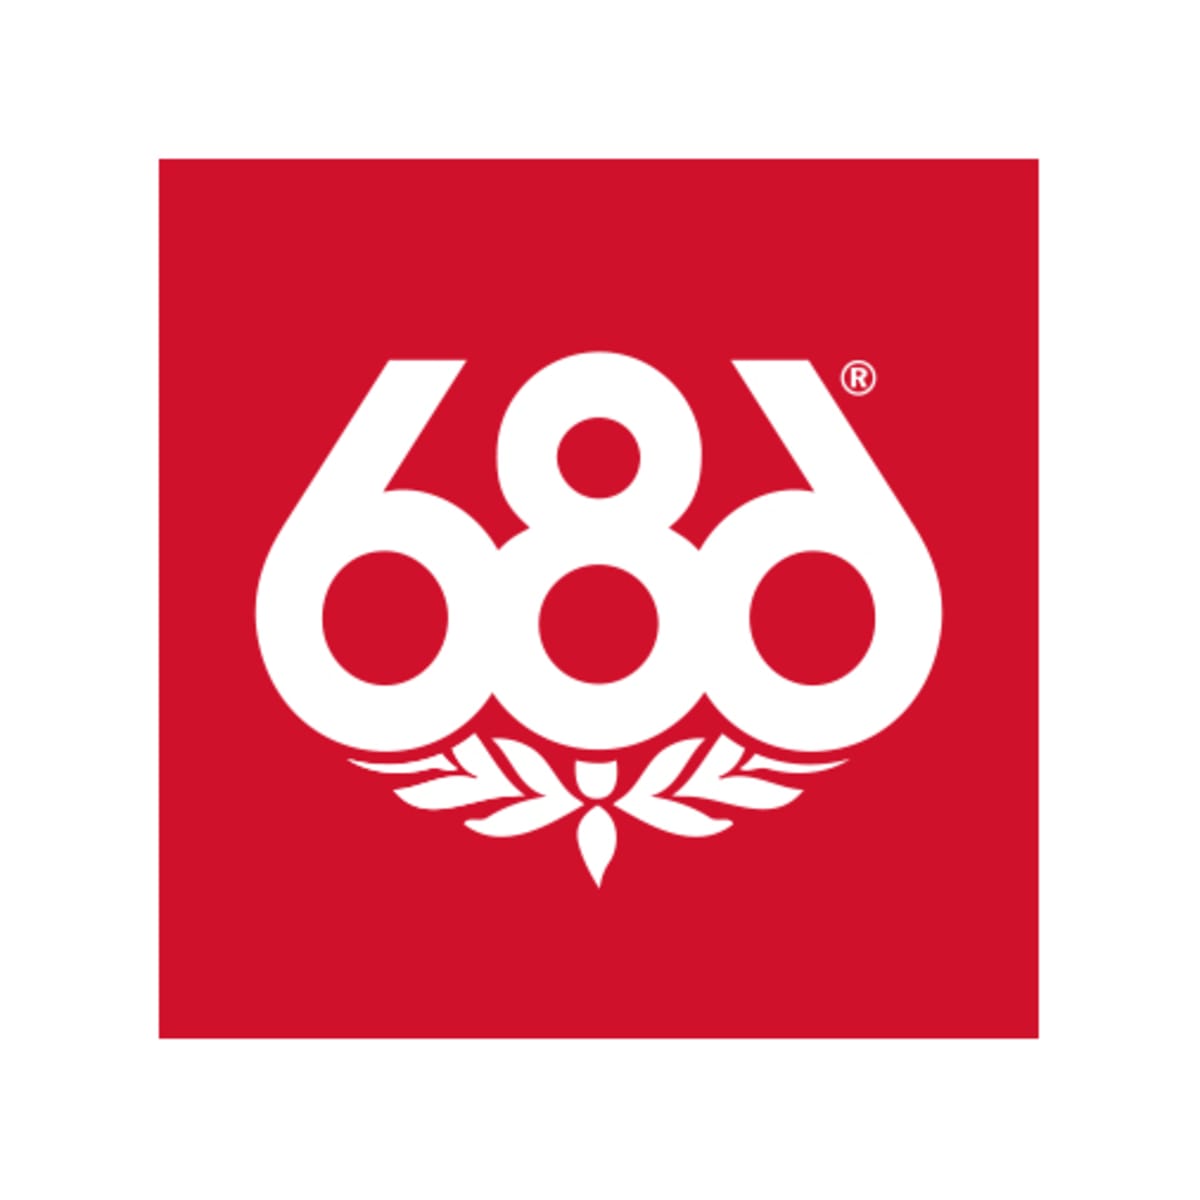 686-2018-logo.jpg